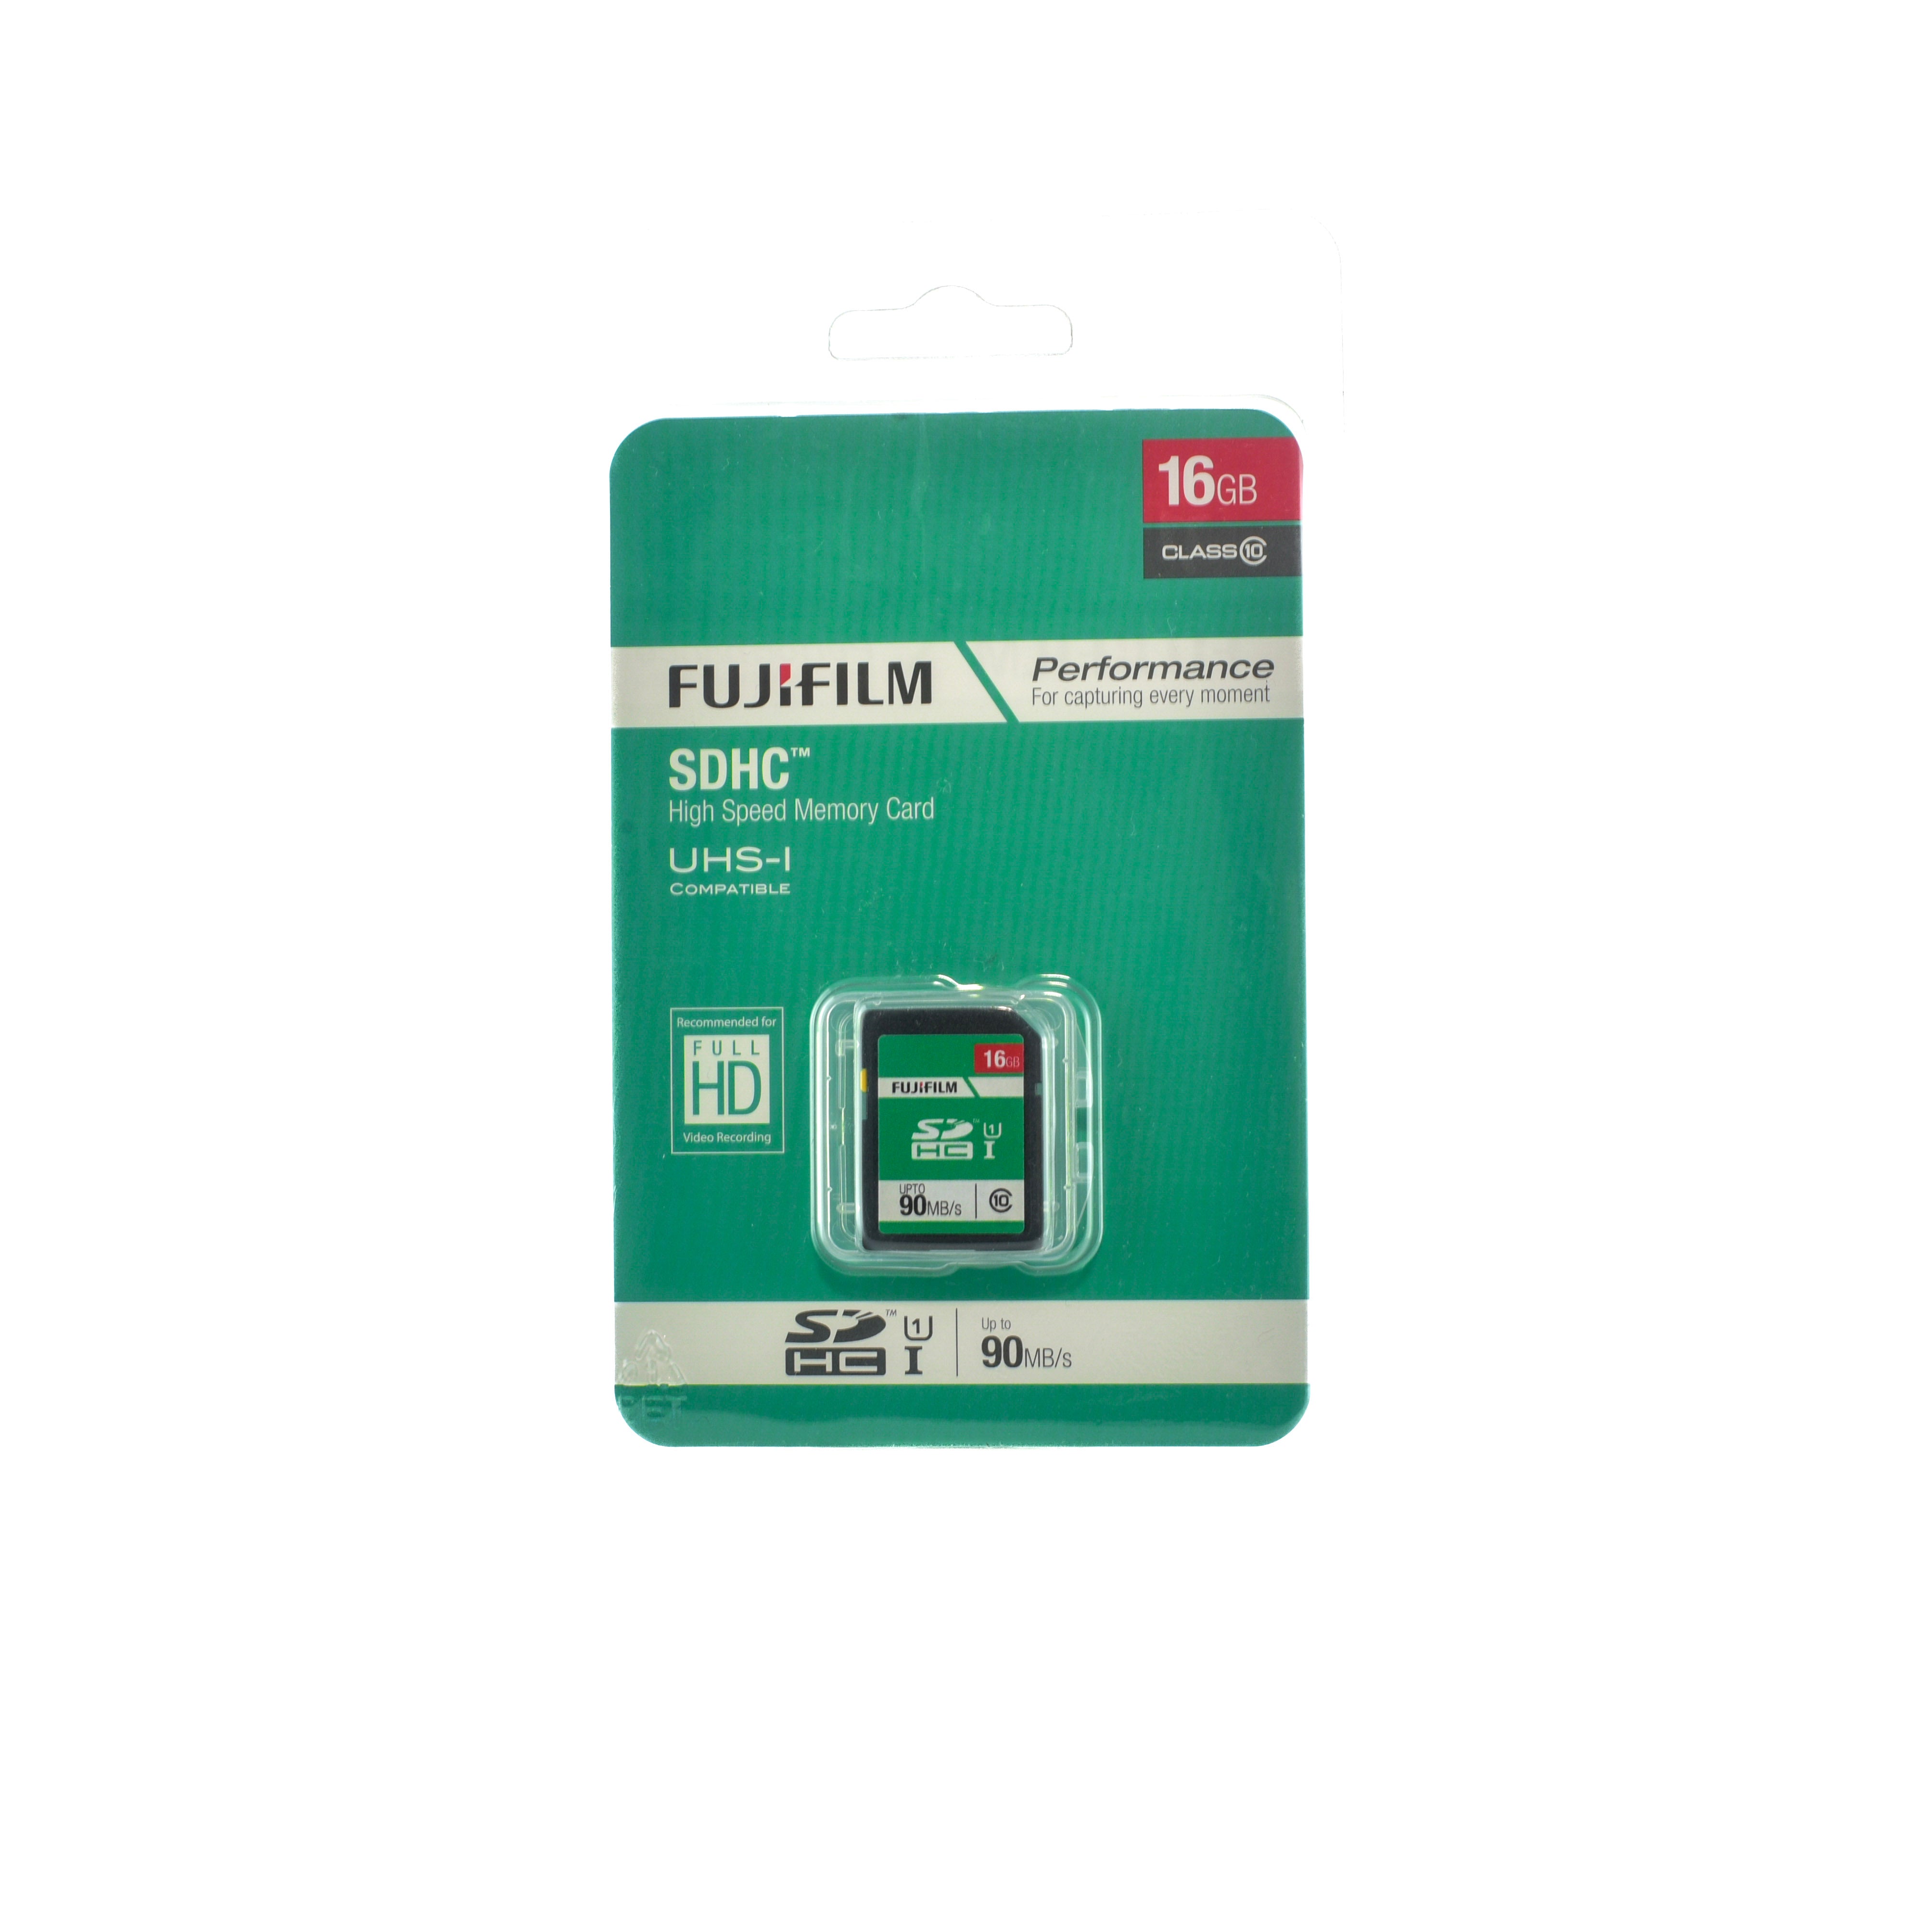 Fujifilm 16 GB SDHC Card Performance